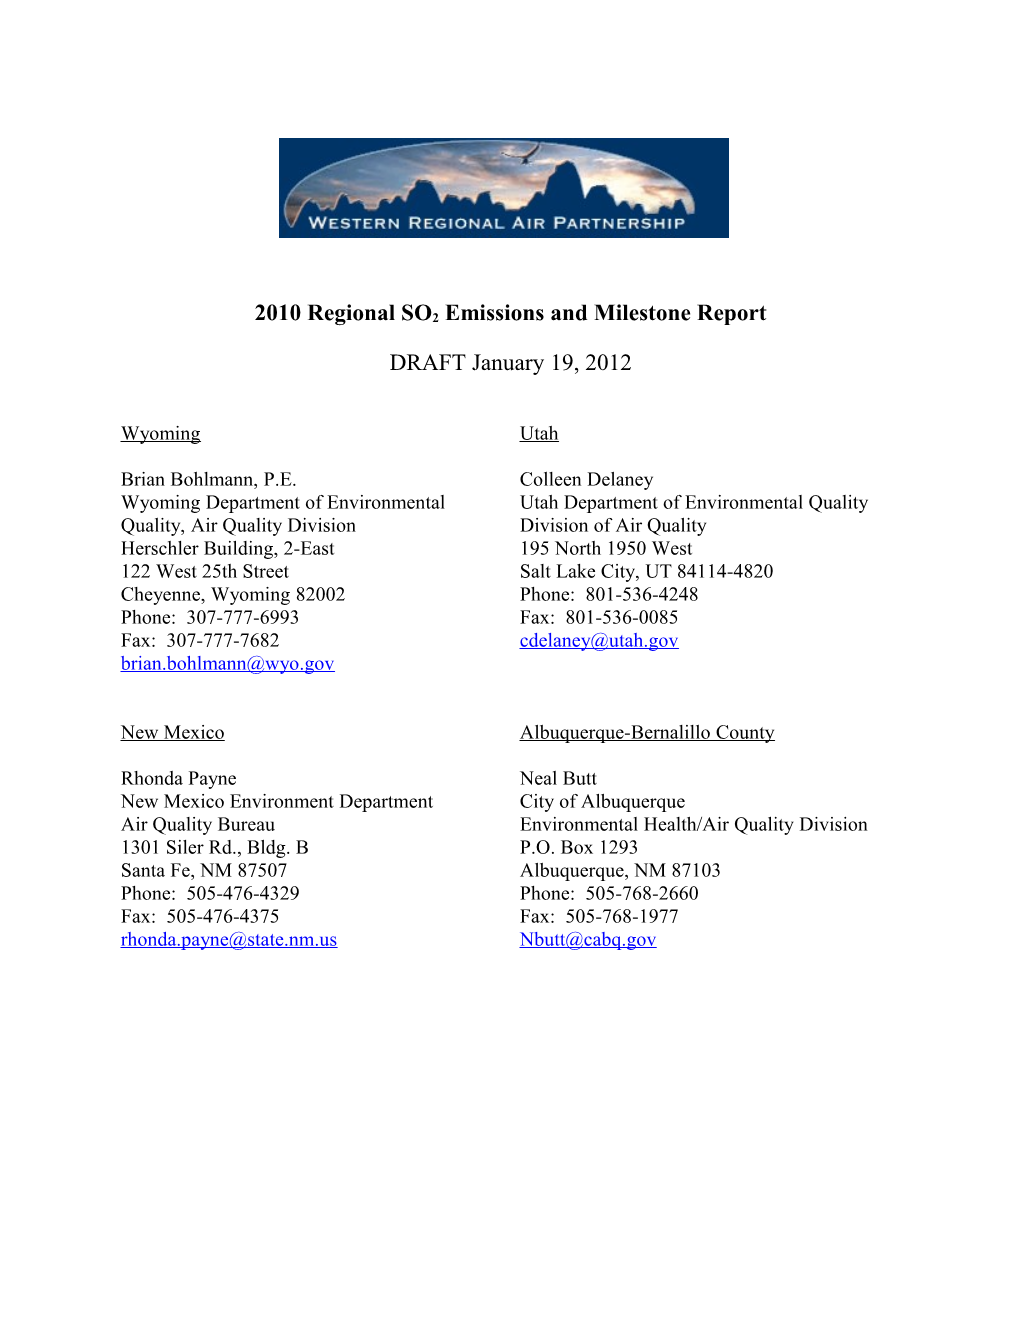 Final WRAP Milestone Report 2008